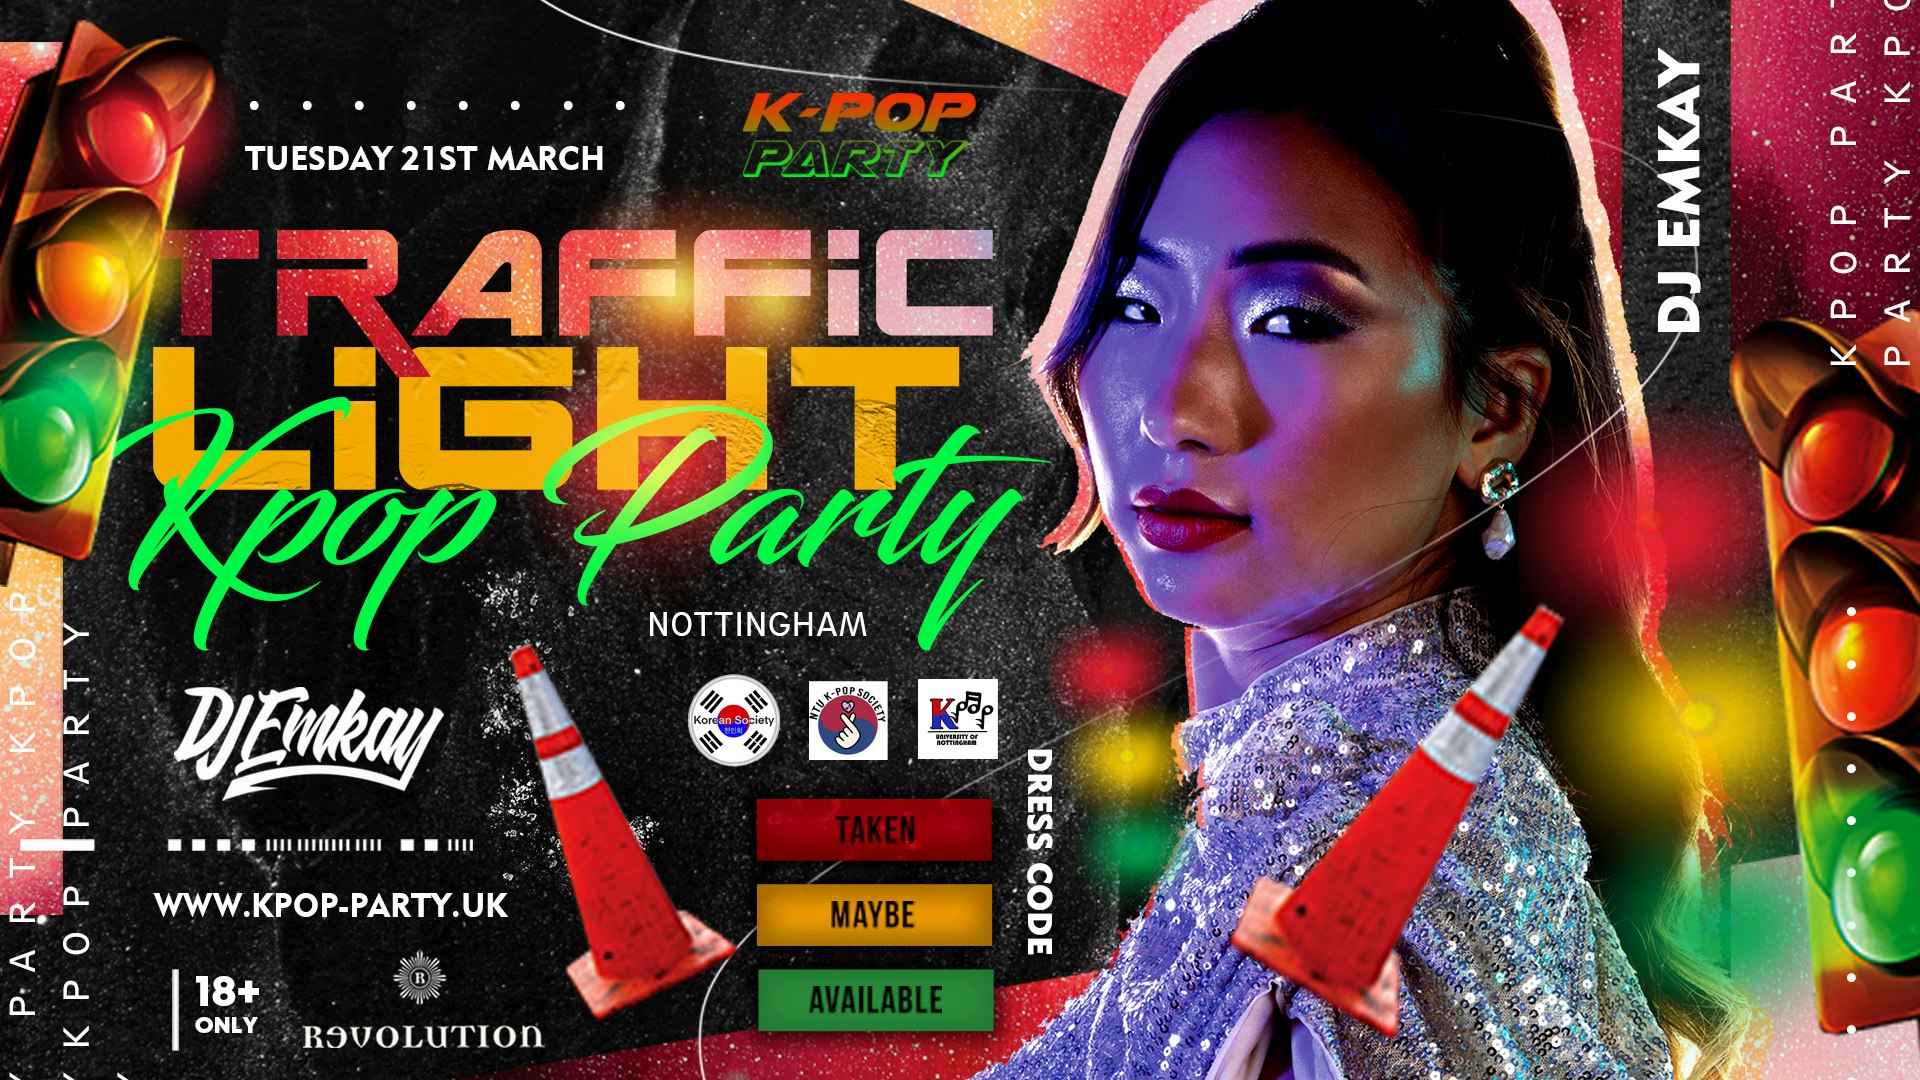 K-Pop Traffic Light Party Nottingham – DJ EMKAY | Tuesday 21st March